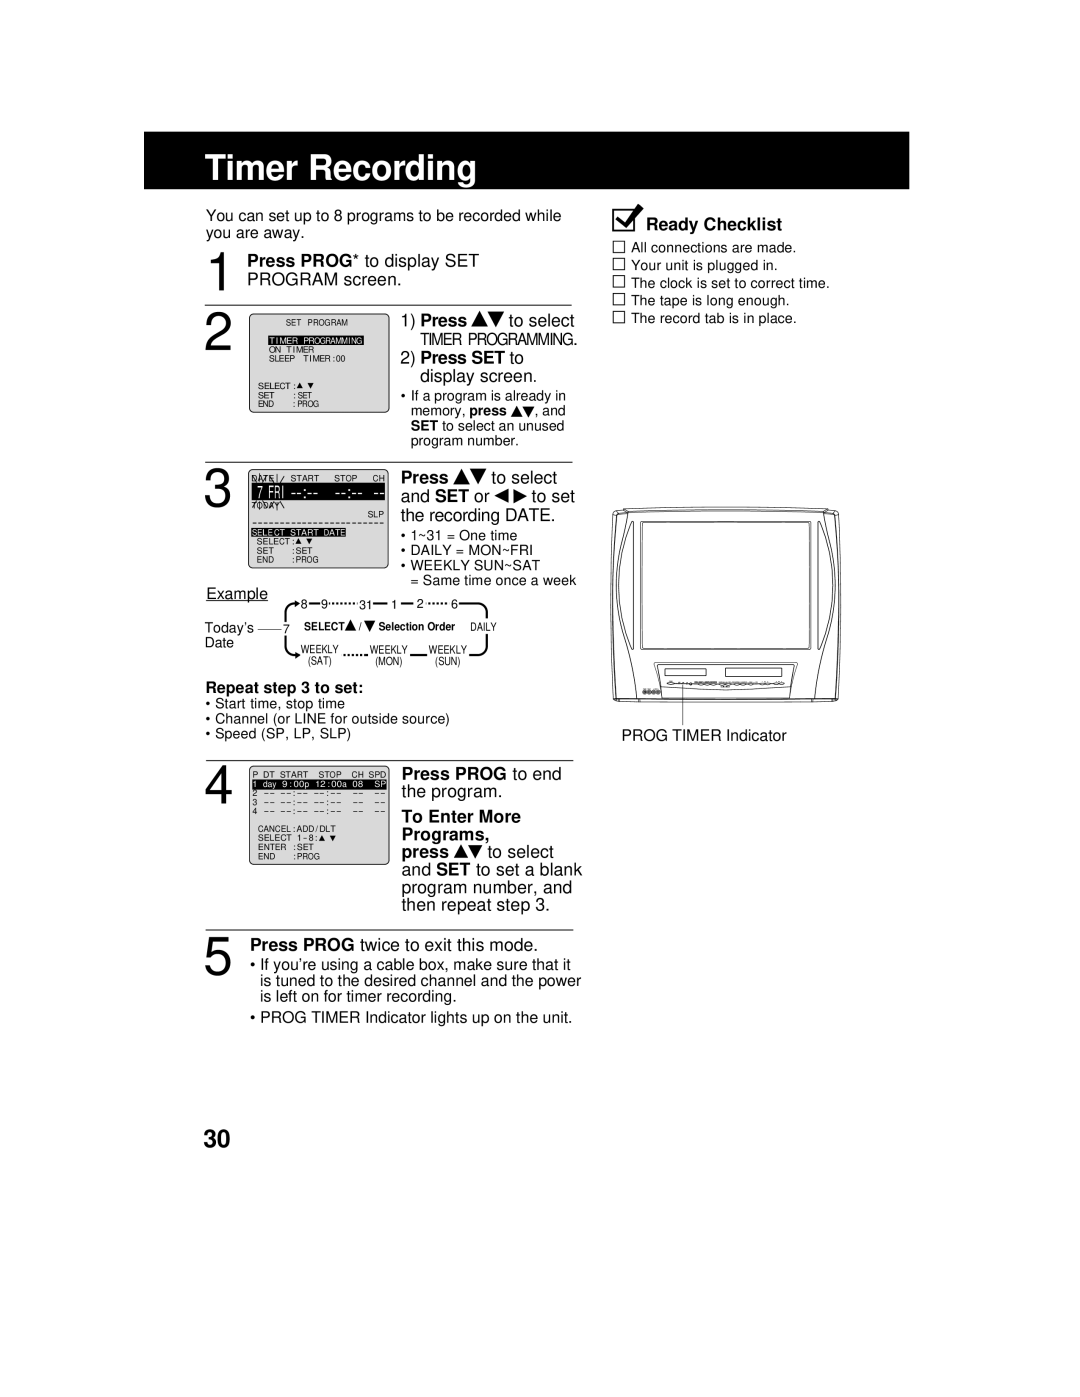 Panasonic AG 527DVDE manual Timer Recording, Press PROG* to display SET PROGRAM screen, Press to select, and SET or, to set 